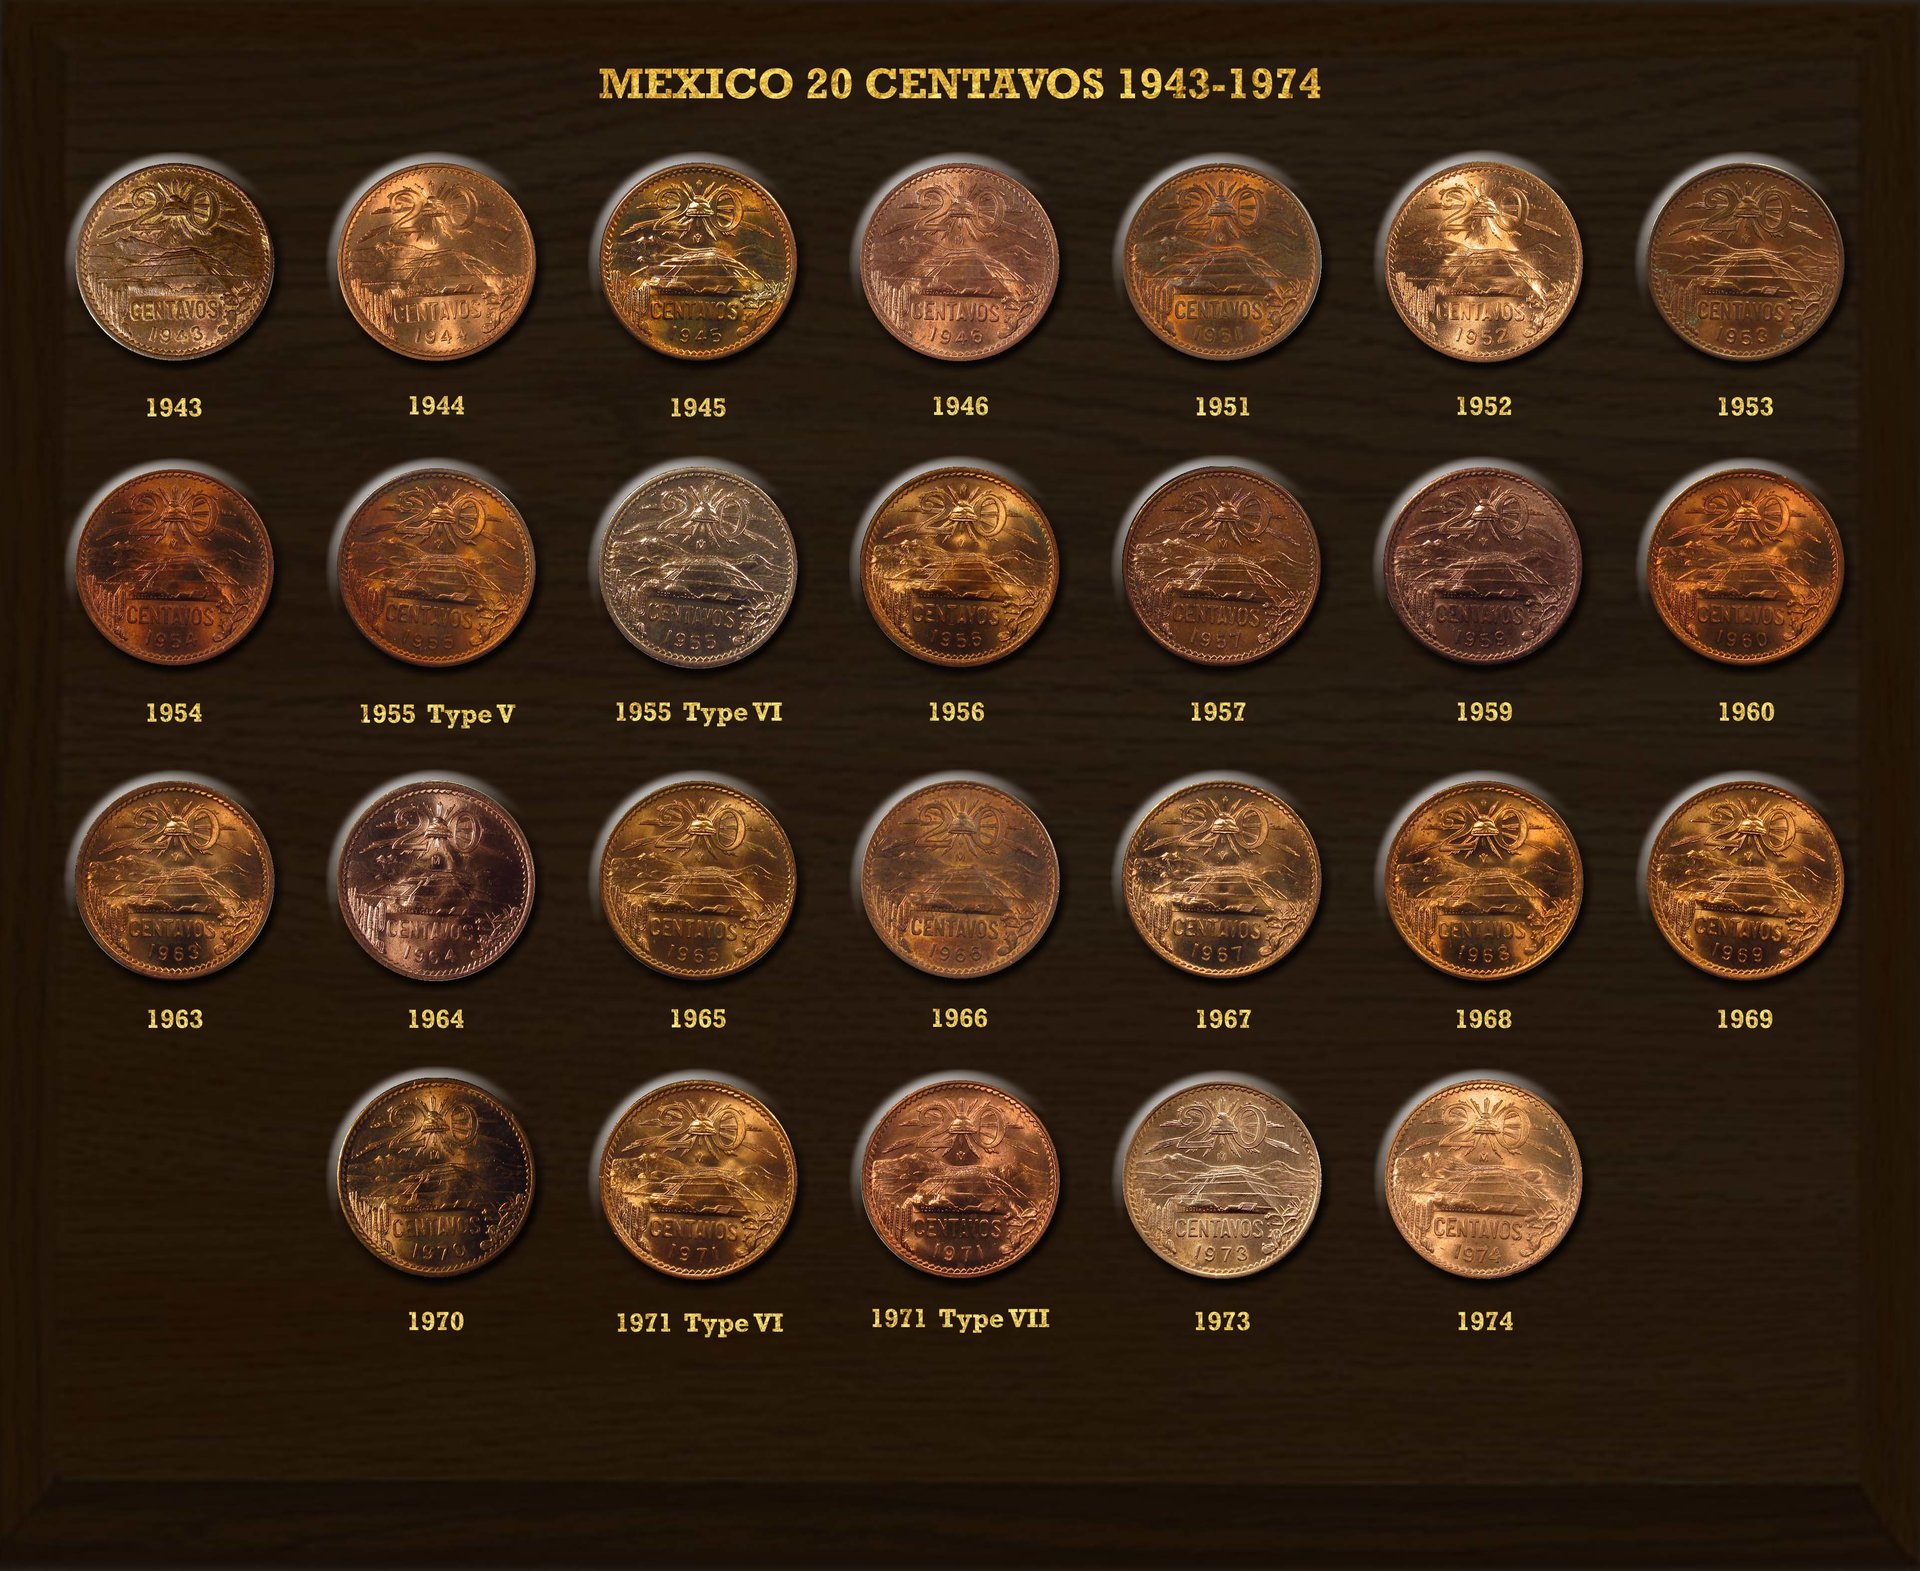 mexico 20 centavos plaque 75 black and gold.jpg